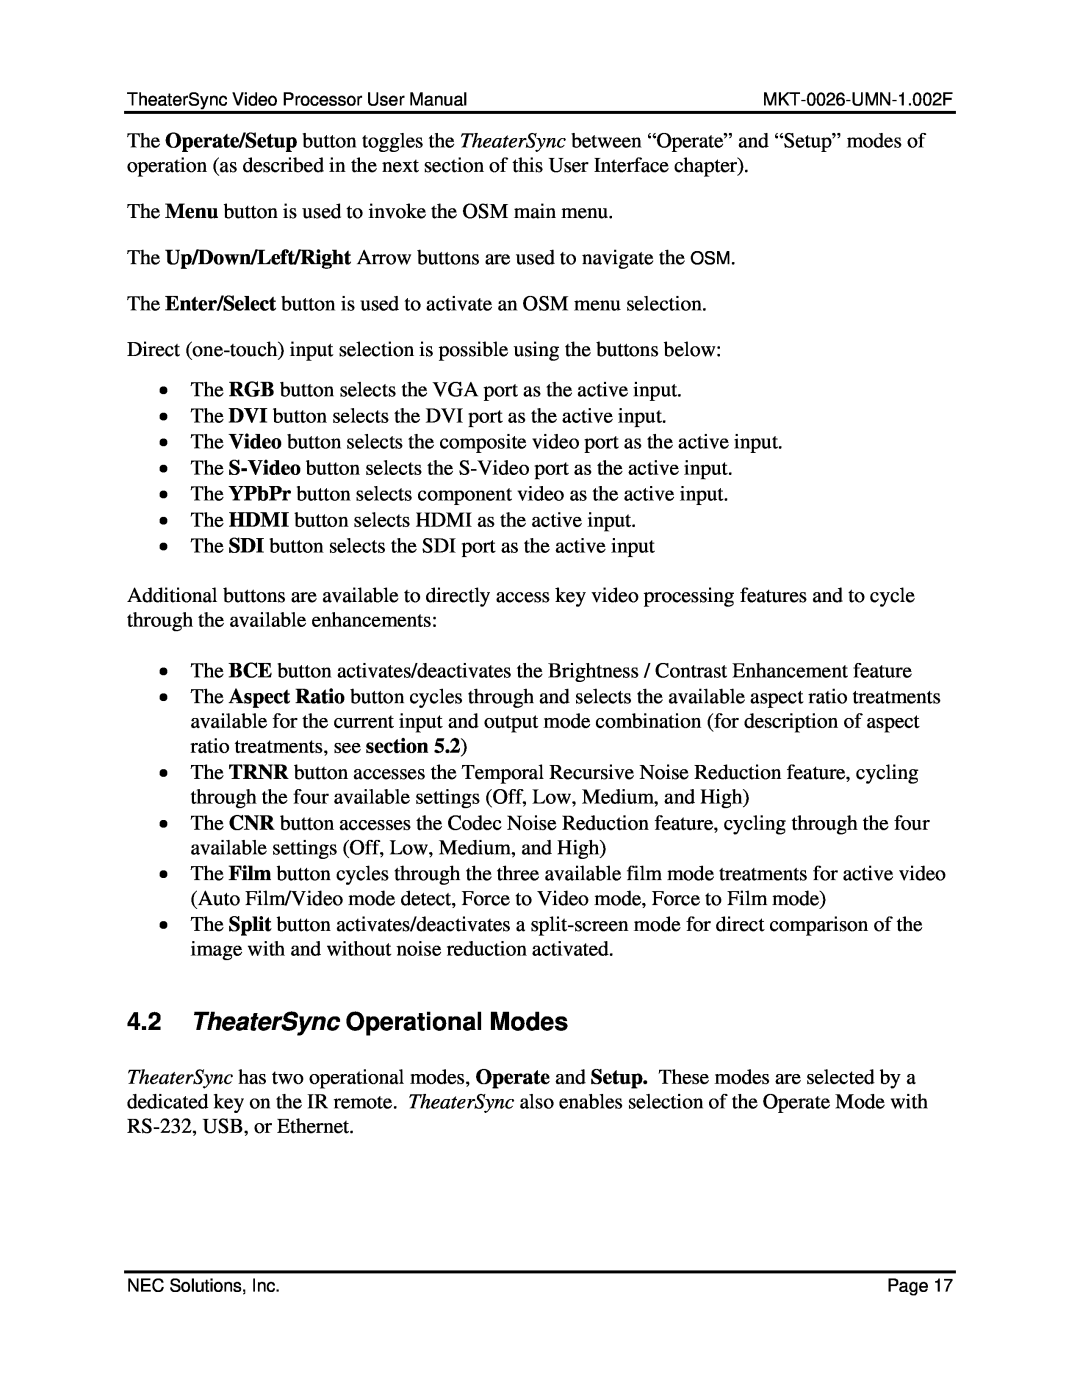 NEC TheaterSync Video Processor user manual 4.2TheaterSync Operational Modes 